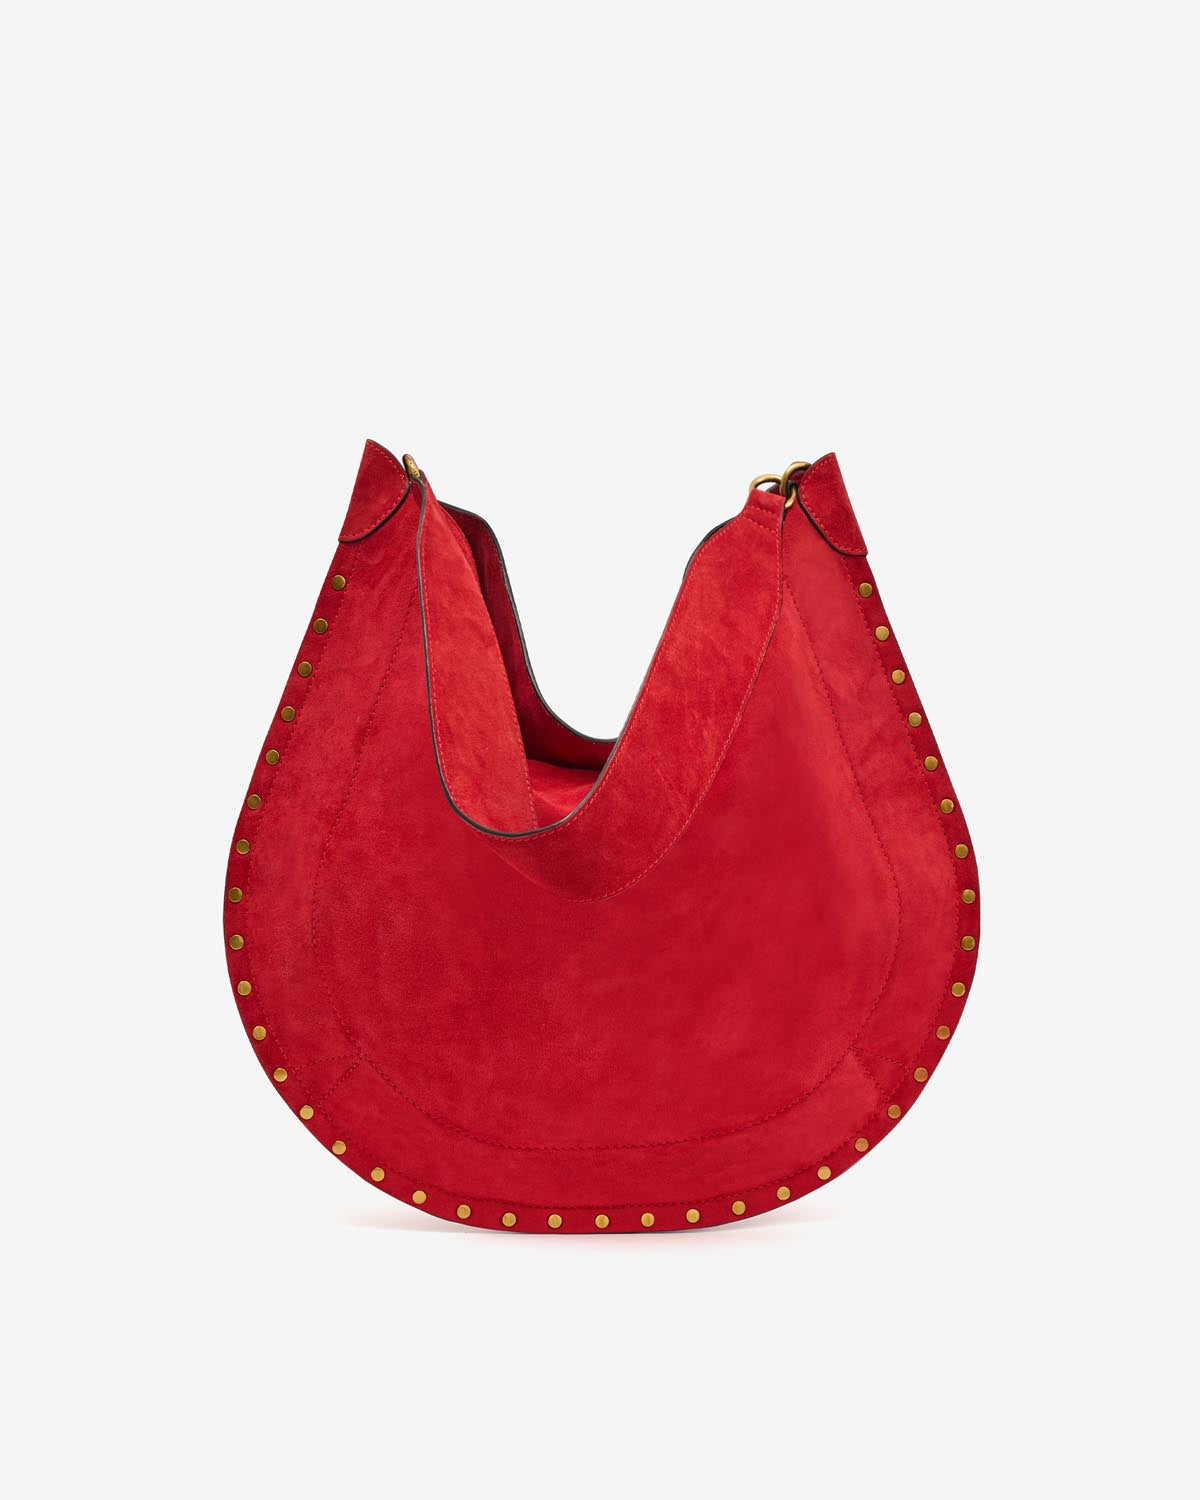 Oskan hobo soft bag Woman Scarlet red 2